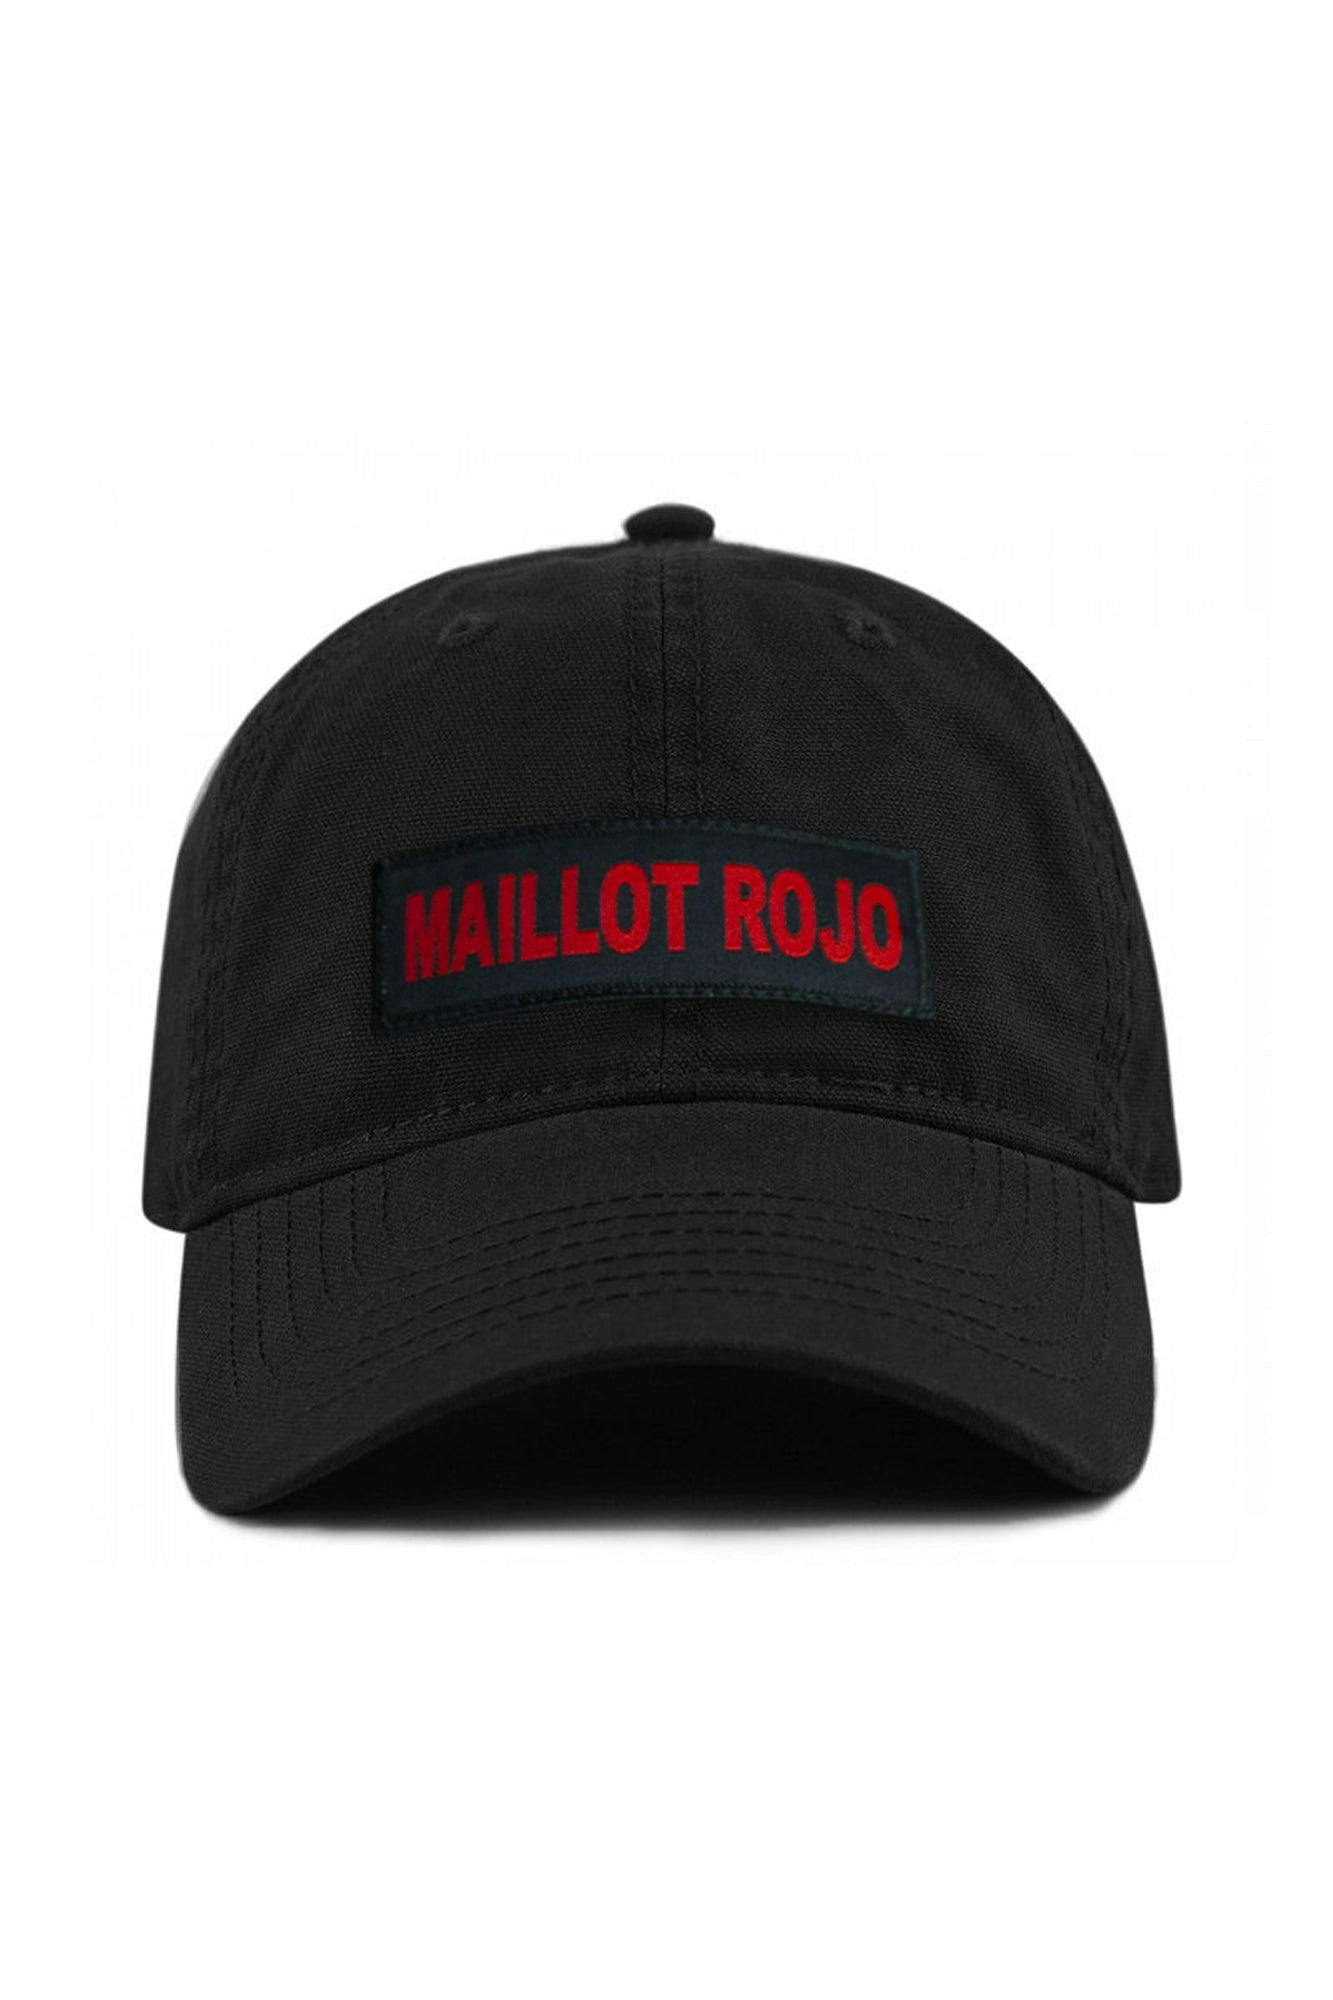 Maillot Rojo Dad Hat Black